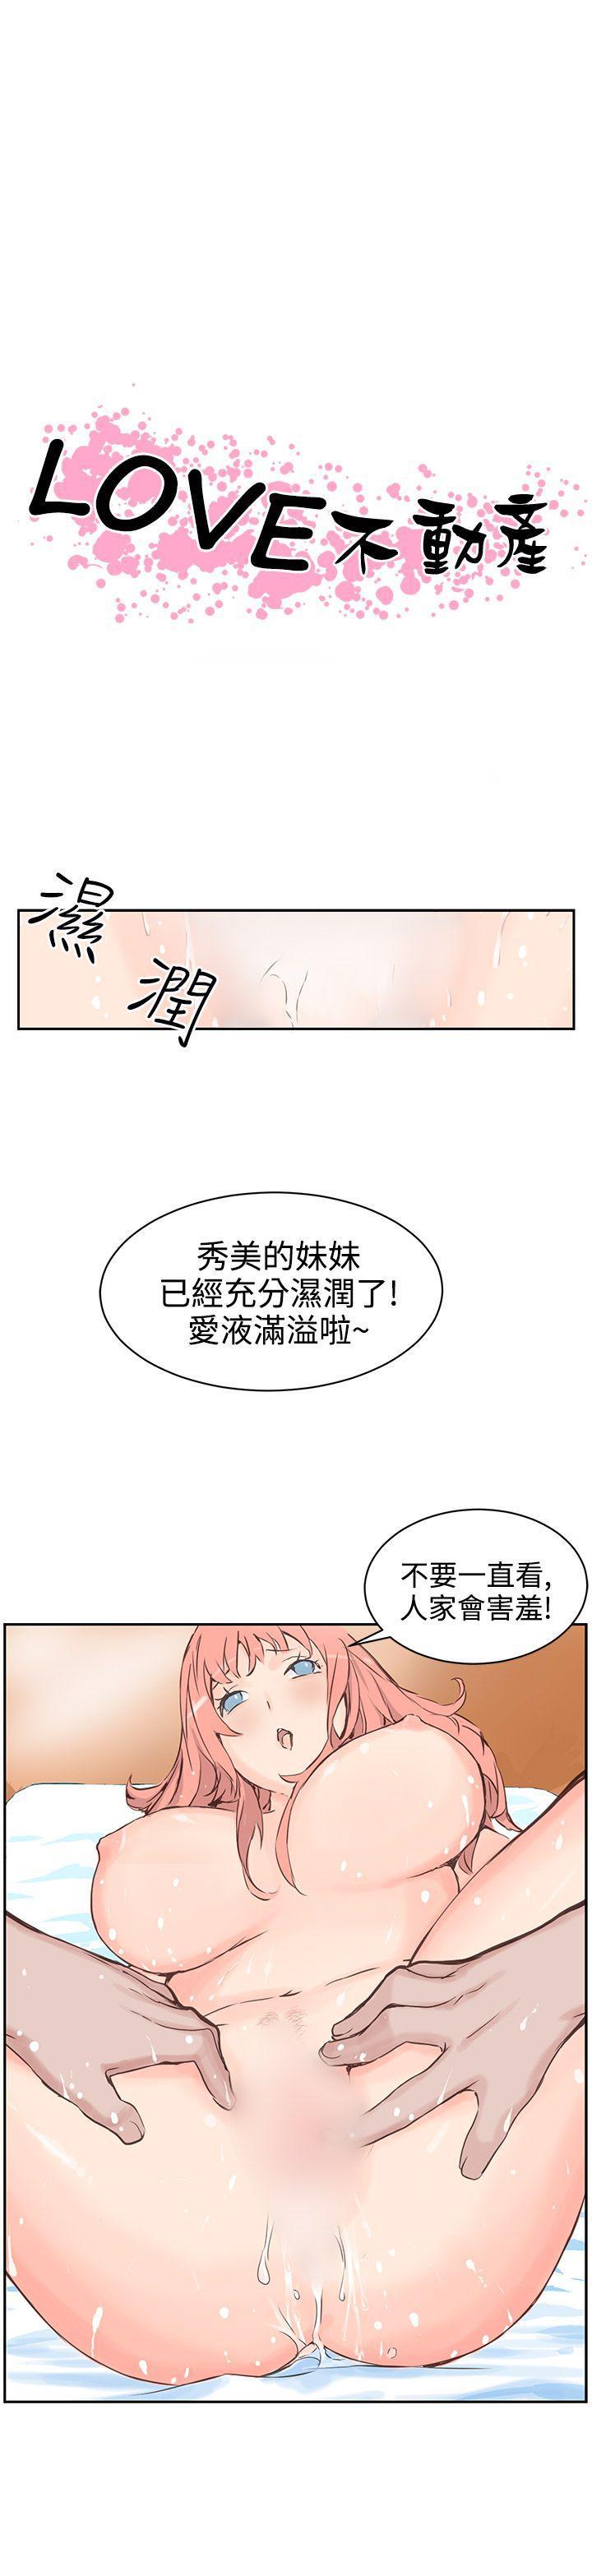 x战警漫画-第4話全彩韩漫标签